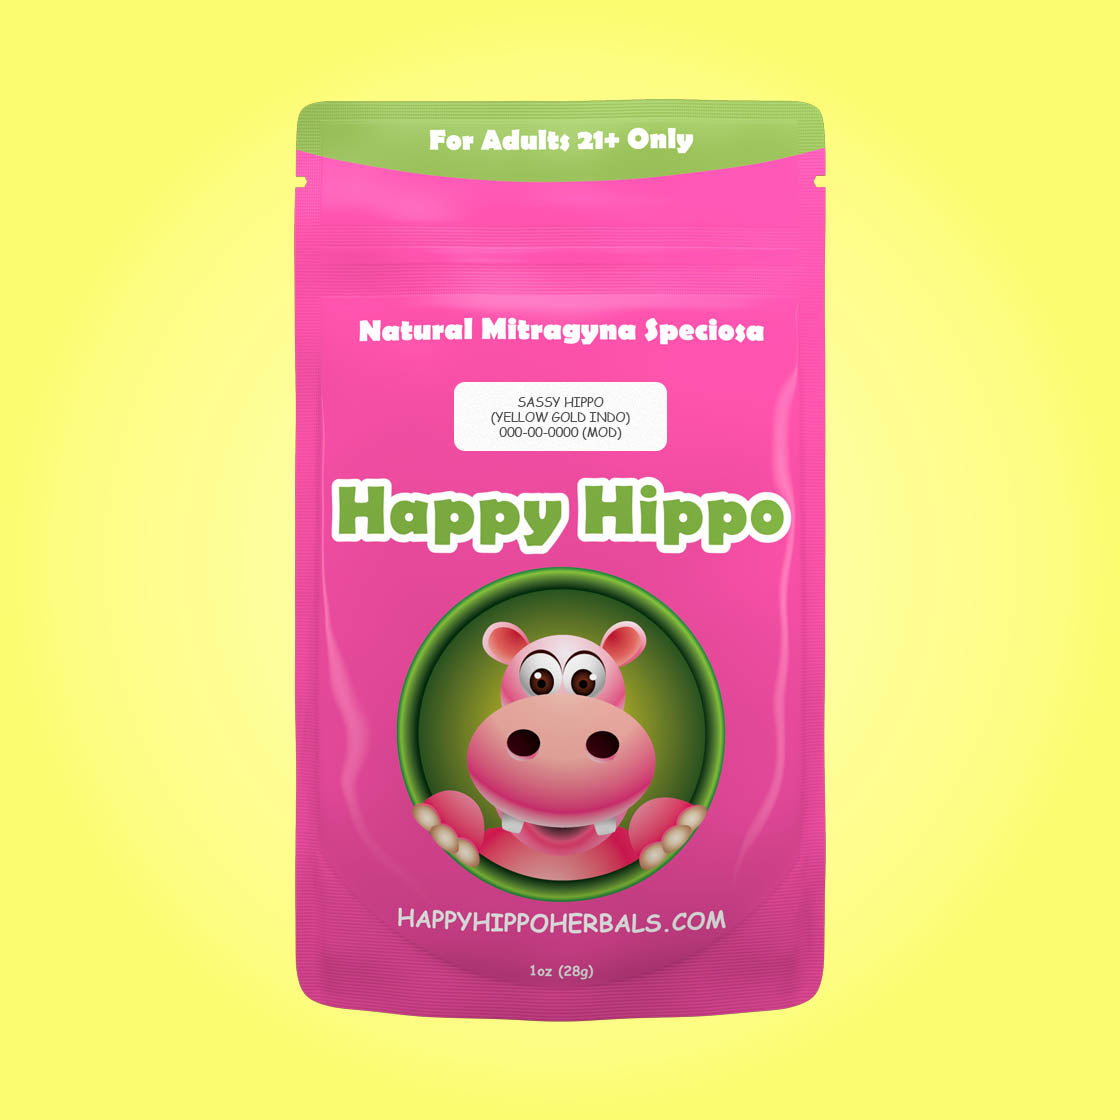 Product Image depicting a 1oz bag of Happy Hippo Yellow Vein Indo Kratom Powder (Mitragyna Speciosa).